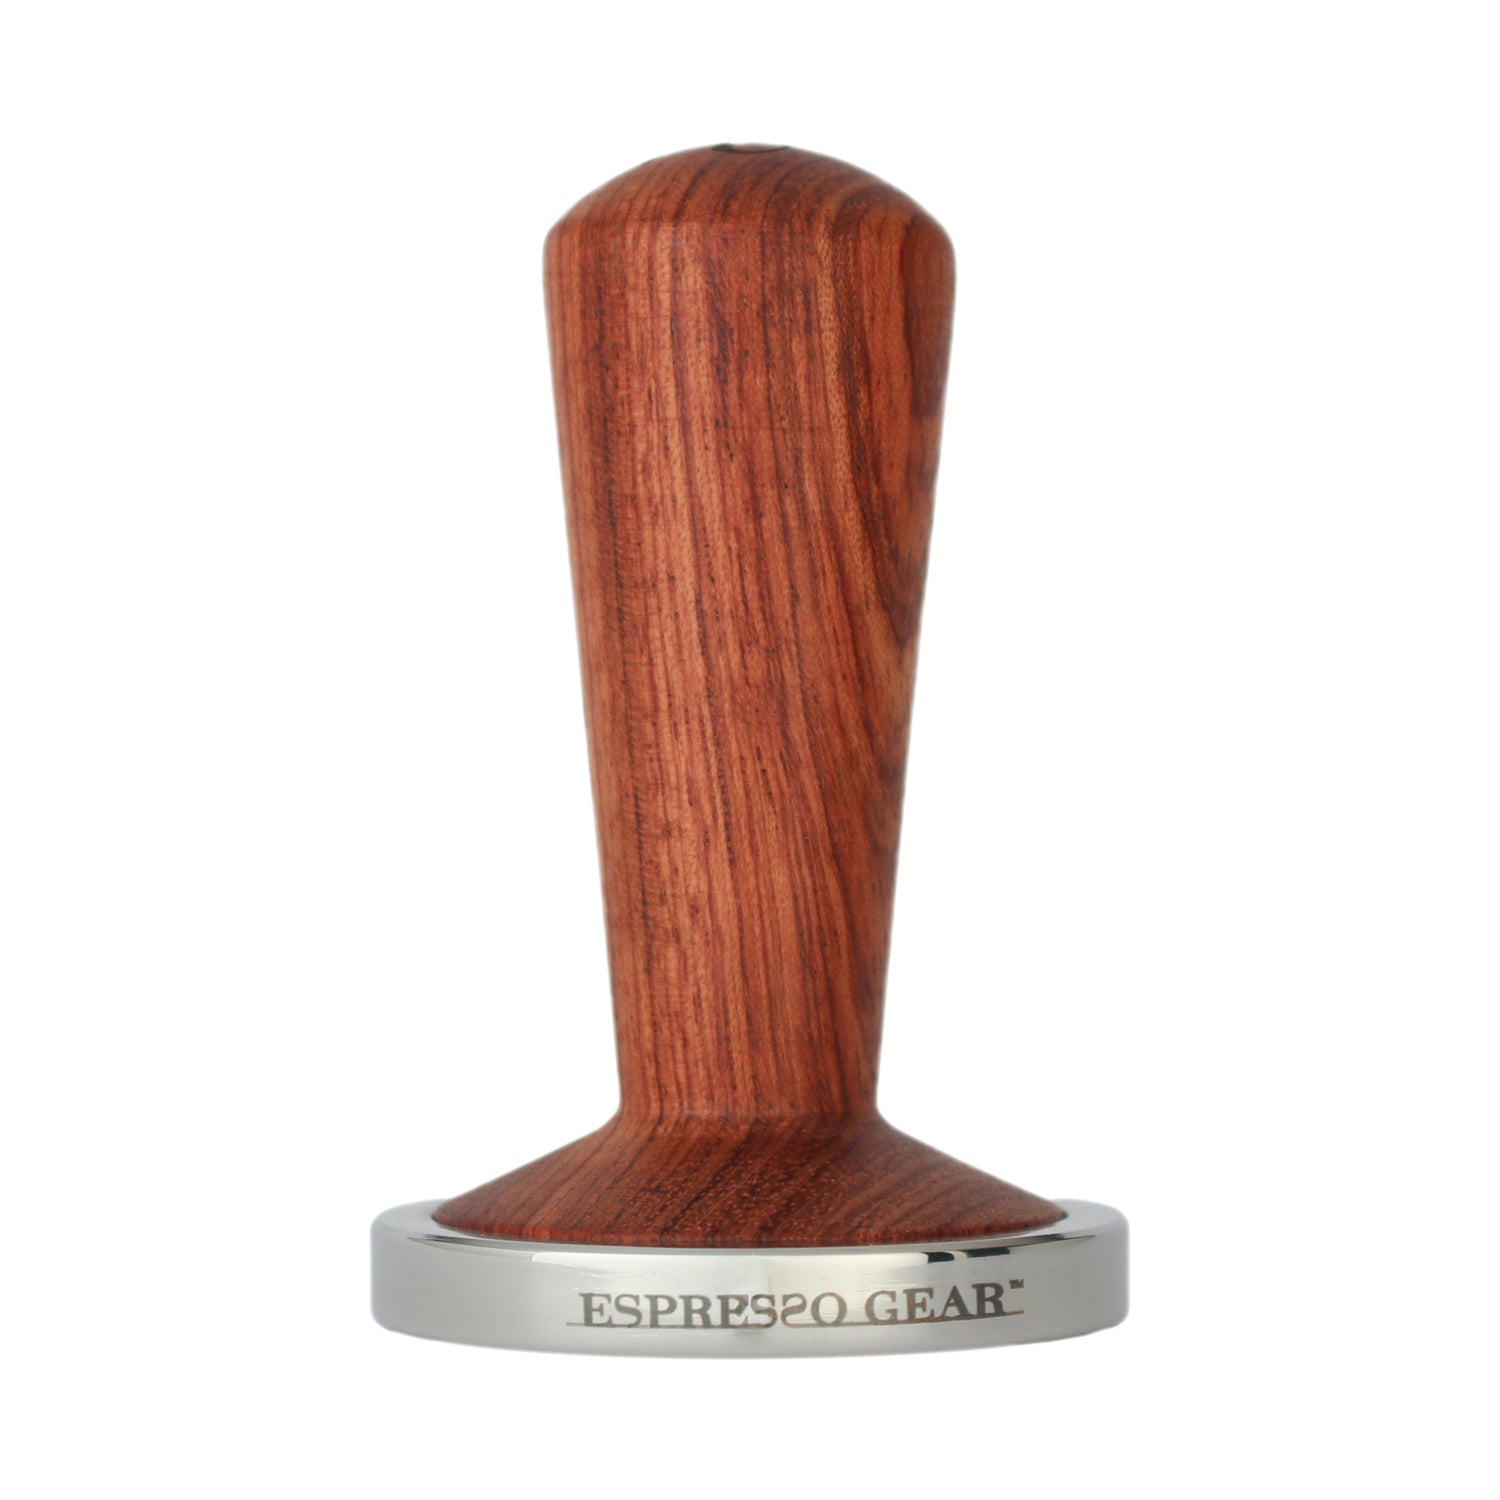 Espresso Gear Luce Rosewood tamper 58mm